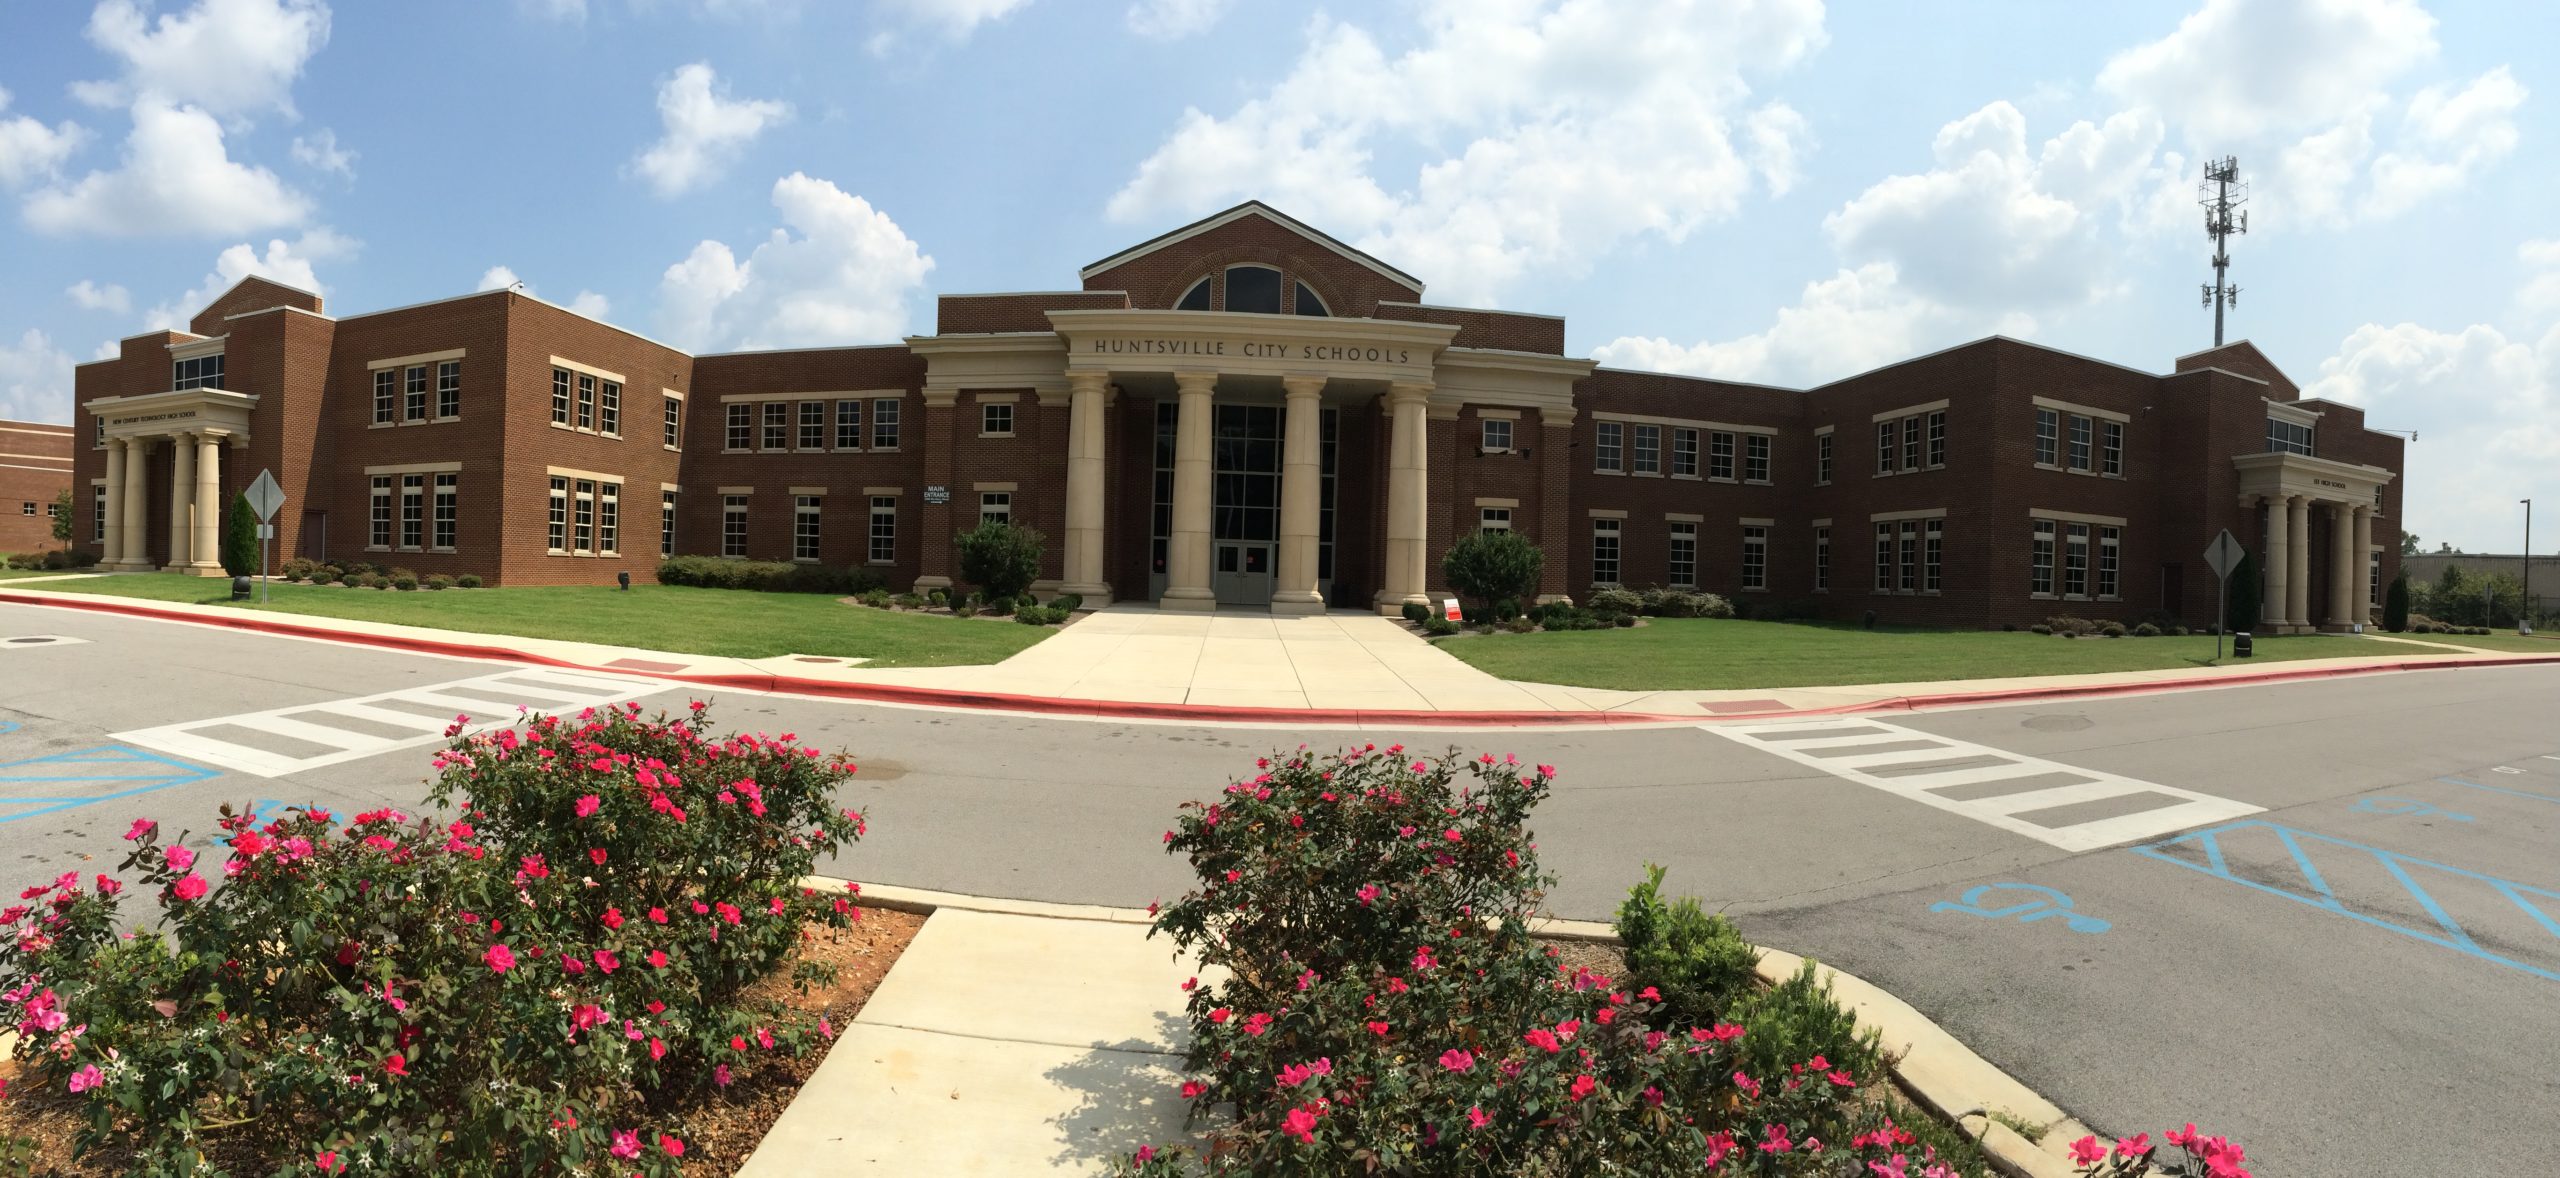 panaroma photo of the front of Huntsville City Schools entrance